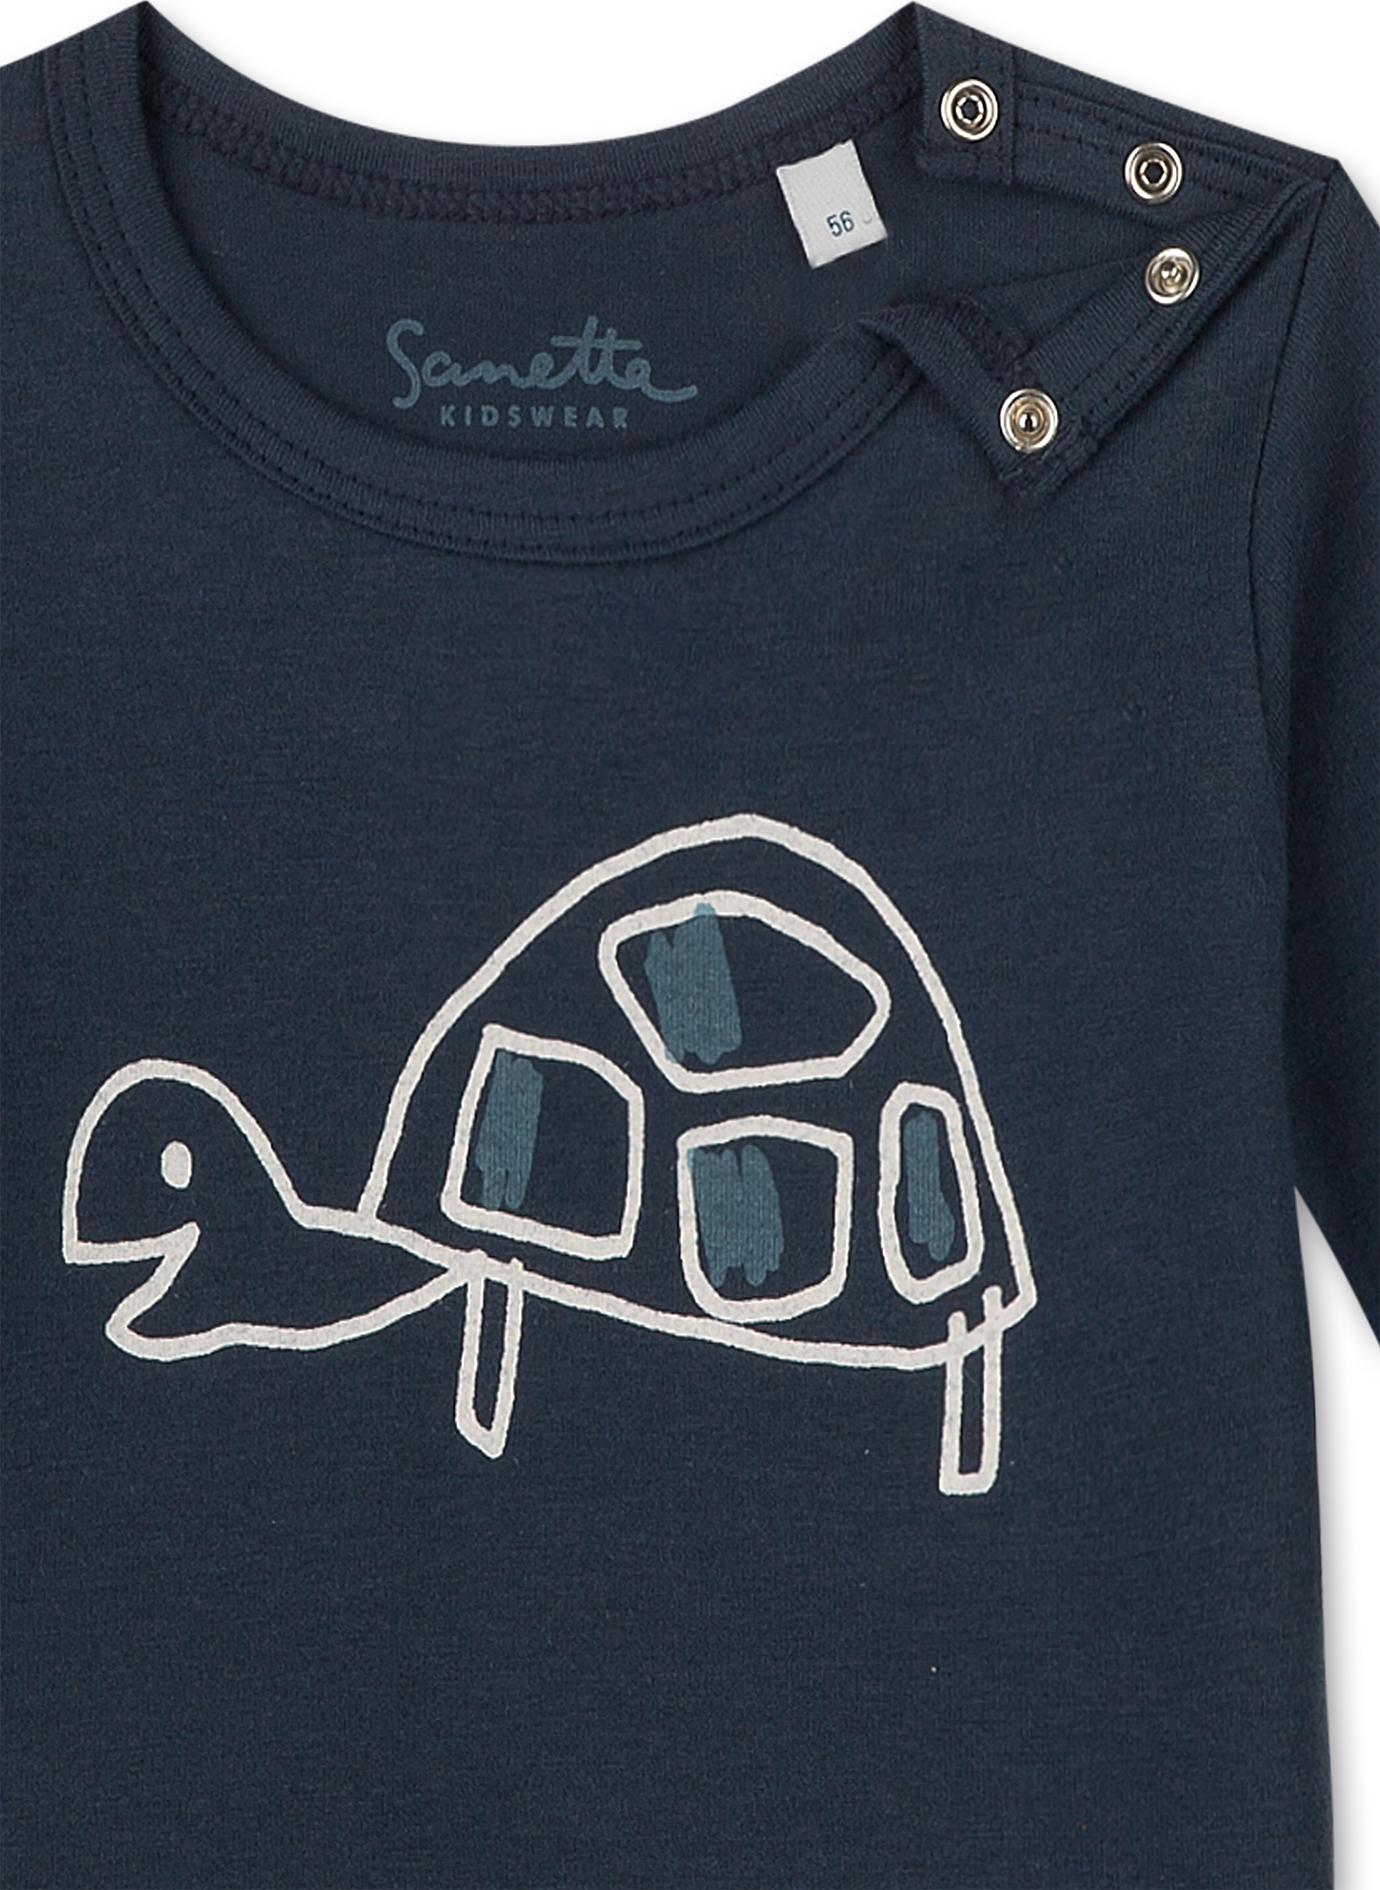 Jungen-Shirt langarm Dunkelblau Turtle